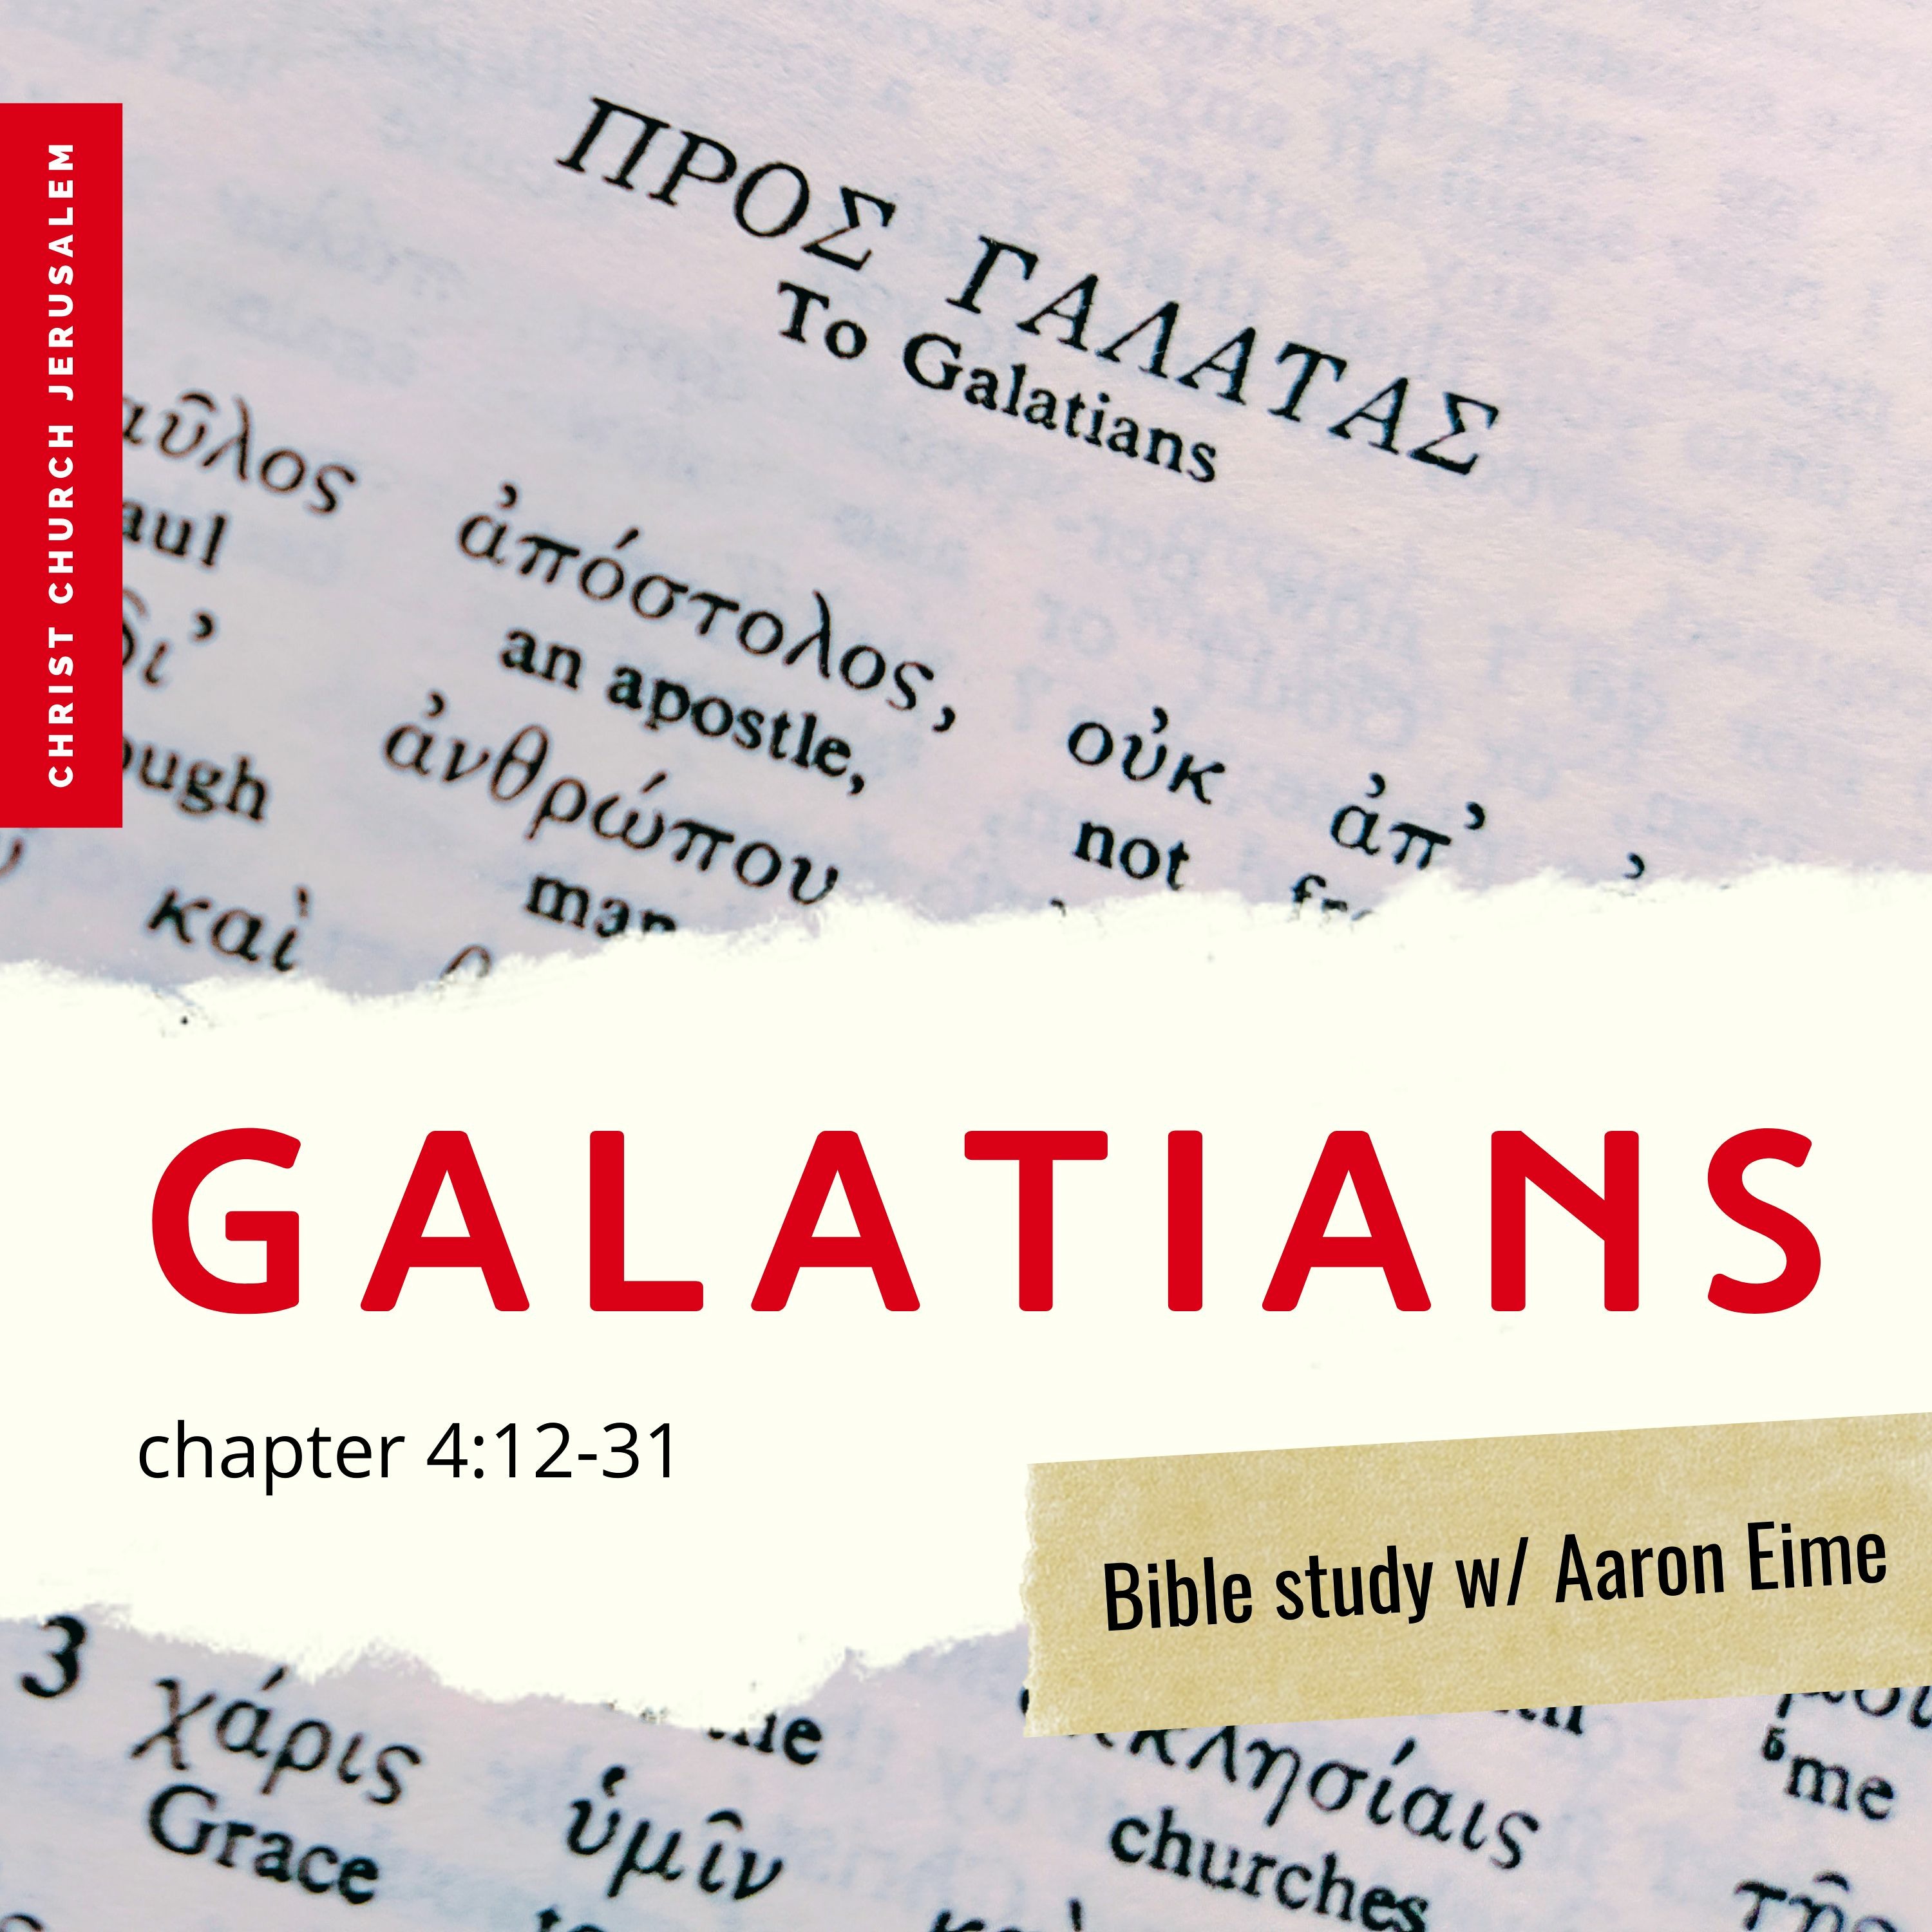 Galatians 4:12-31 - Bible study